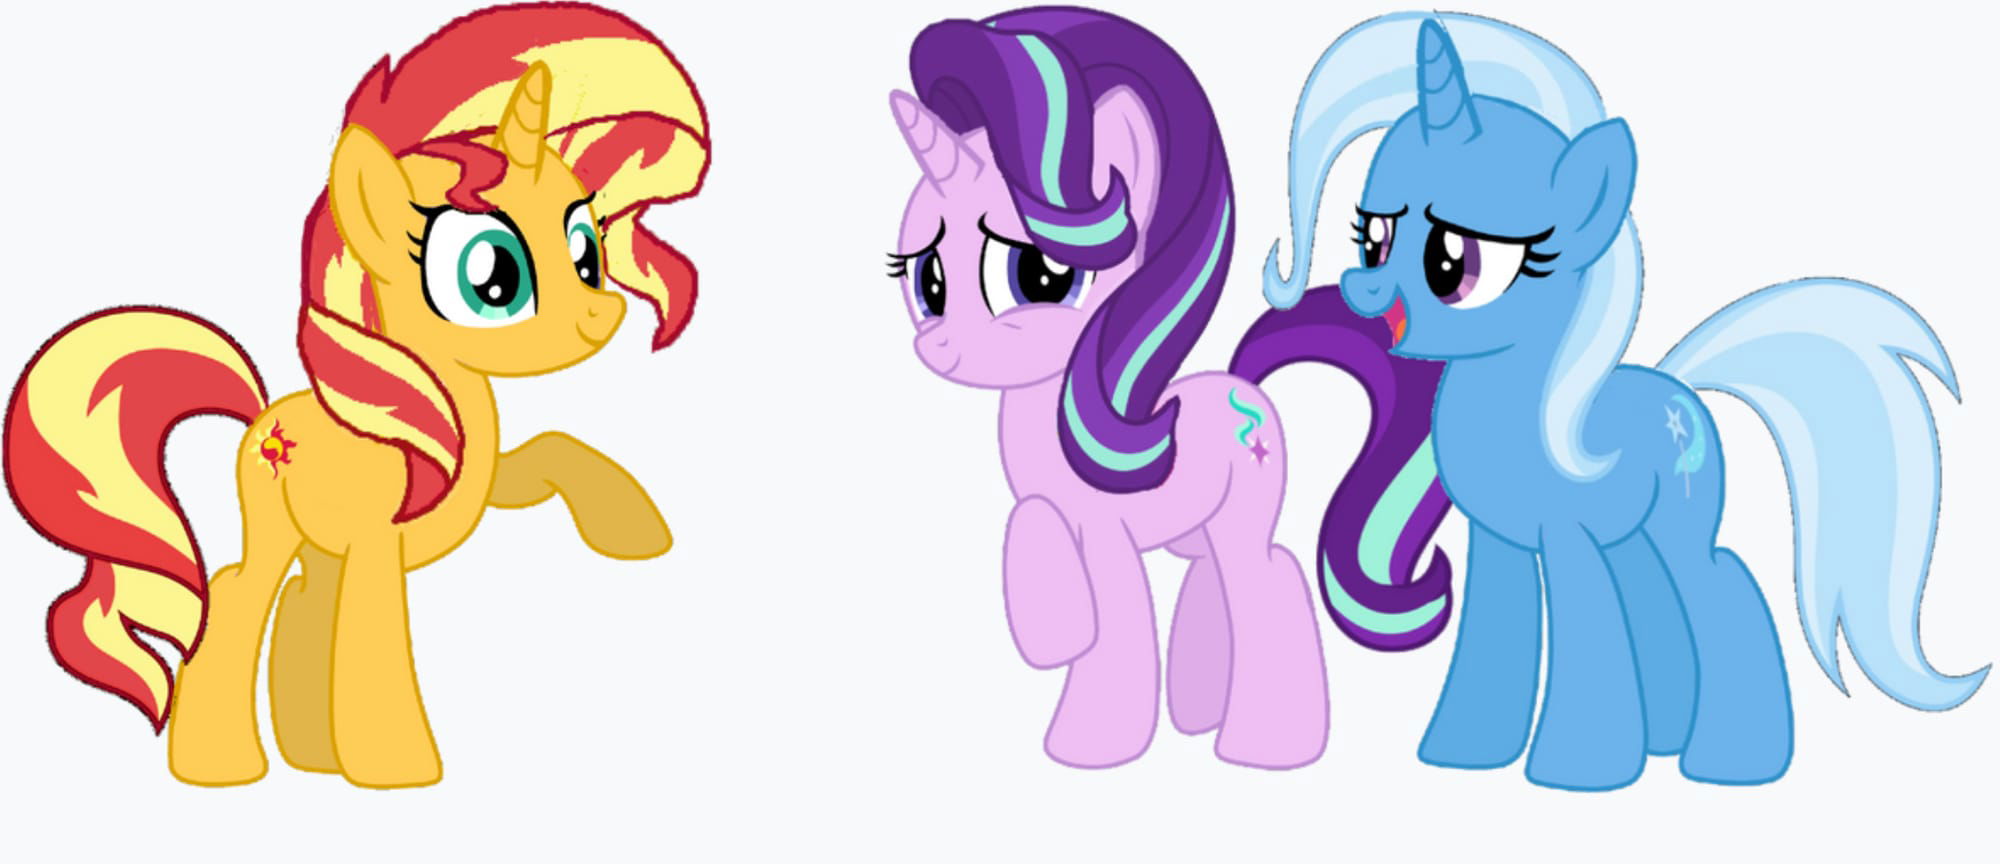 Three new “main” ponies